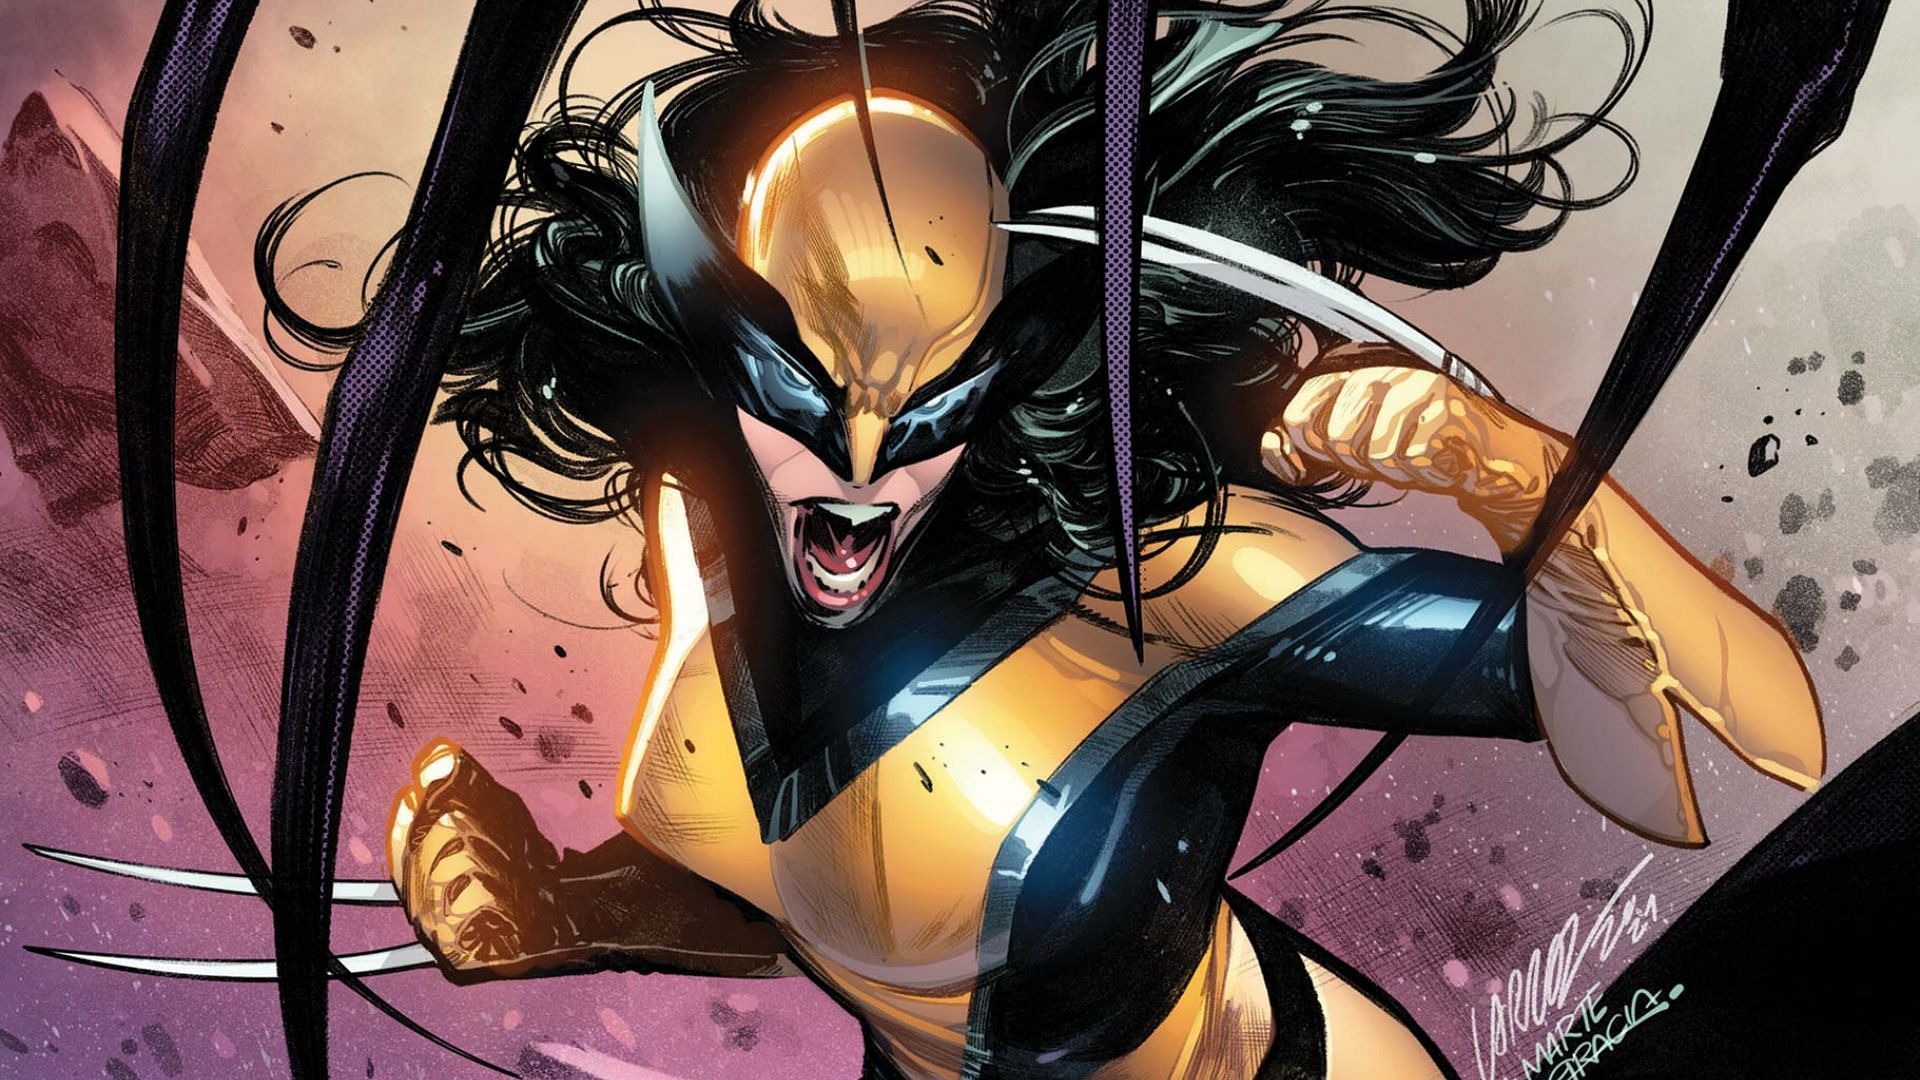 Wolverine in X-Men #10 (Image via Marvel Comics)